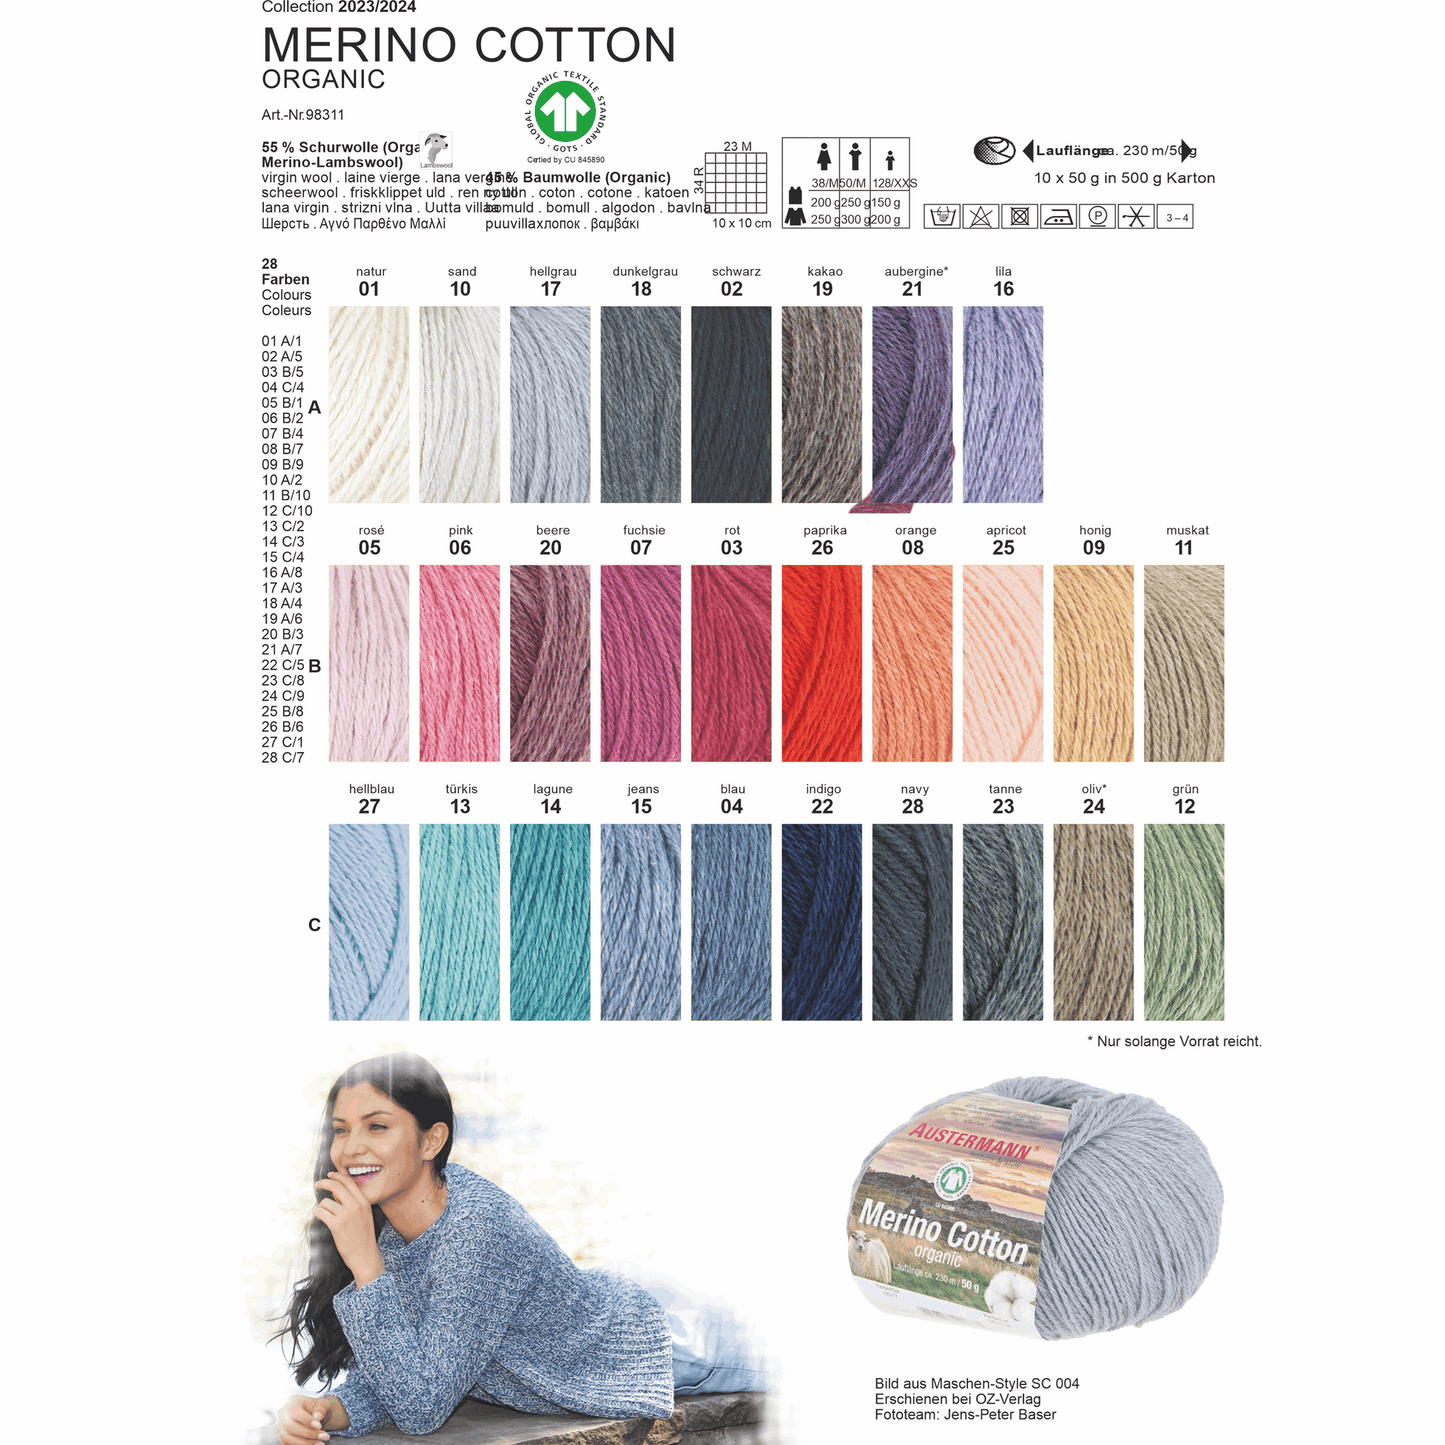 Schoeller-Austermann Gots Merino Cotton, 50g, 98311, Farbe paprika 26